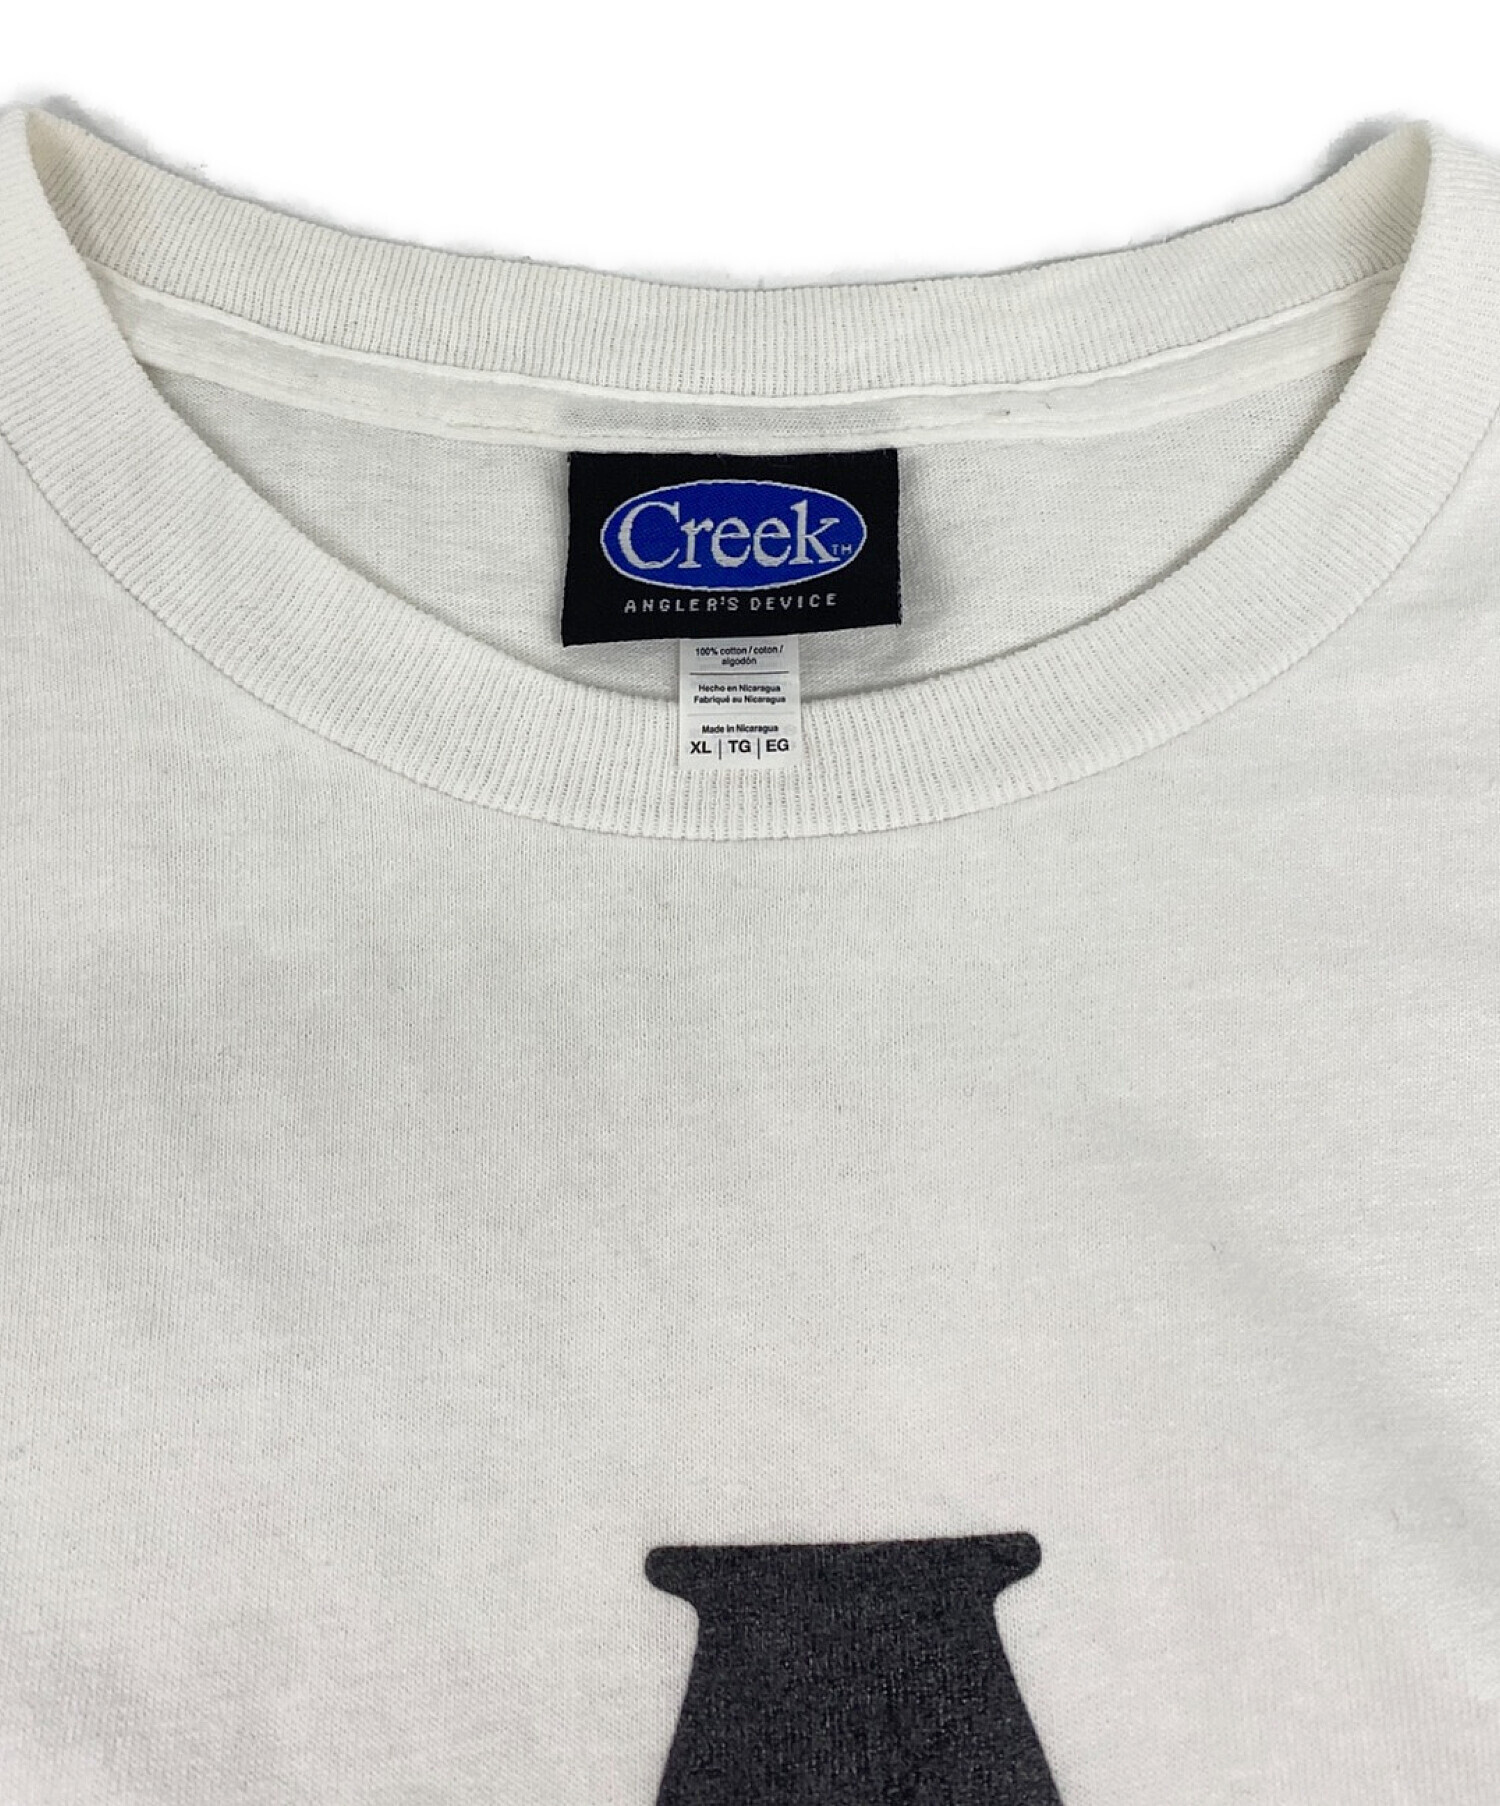 Creek Angler's Device  Tシャツ White XL